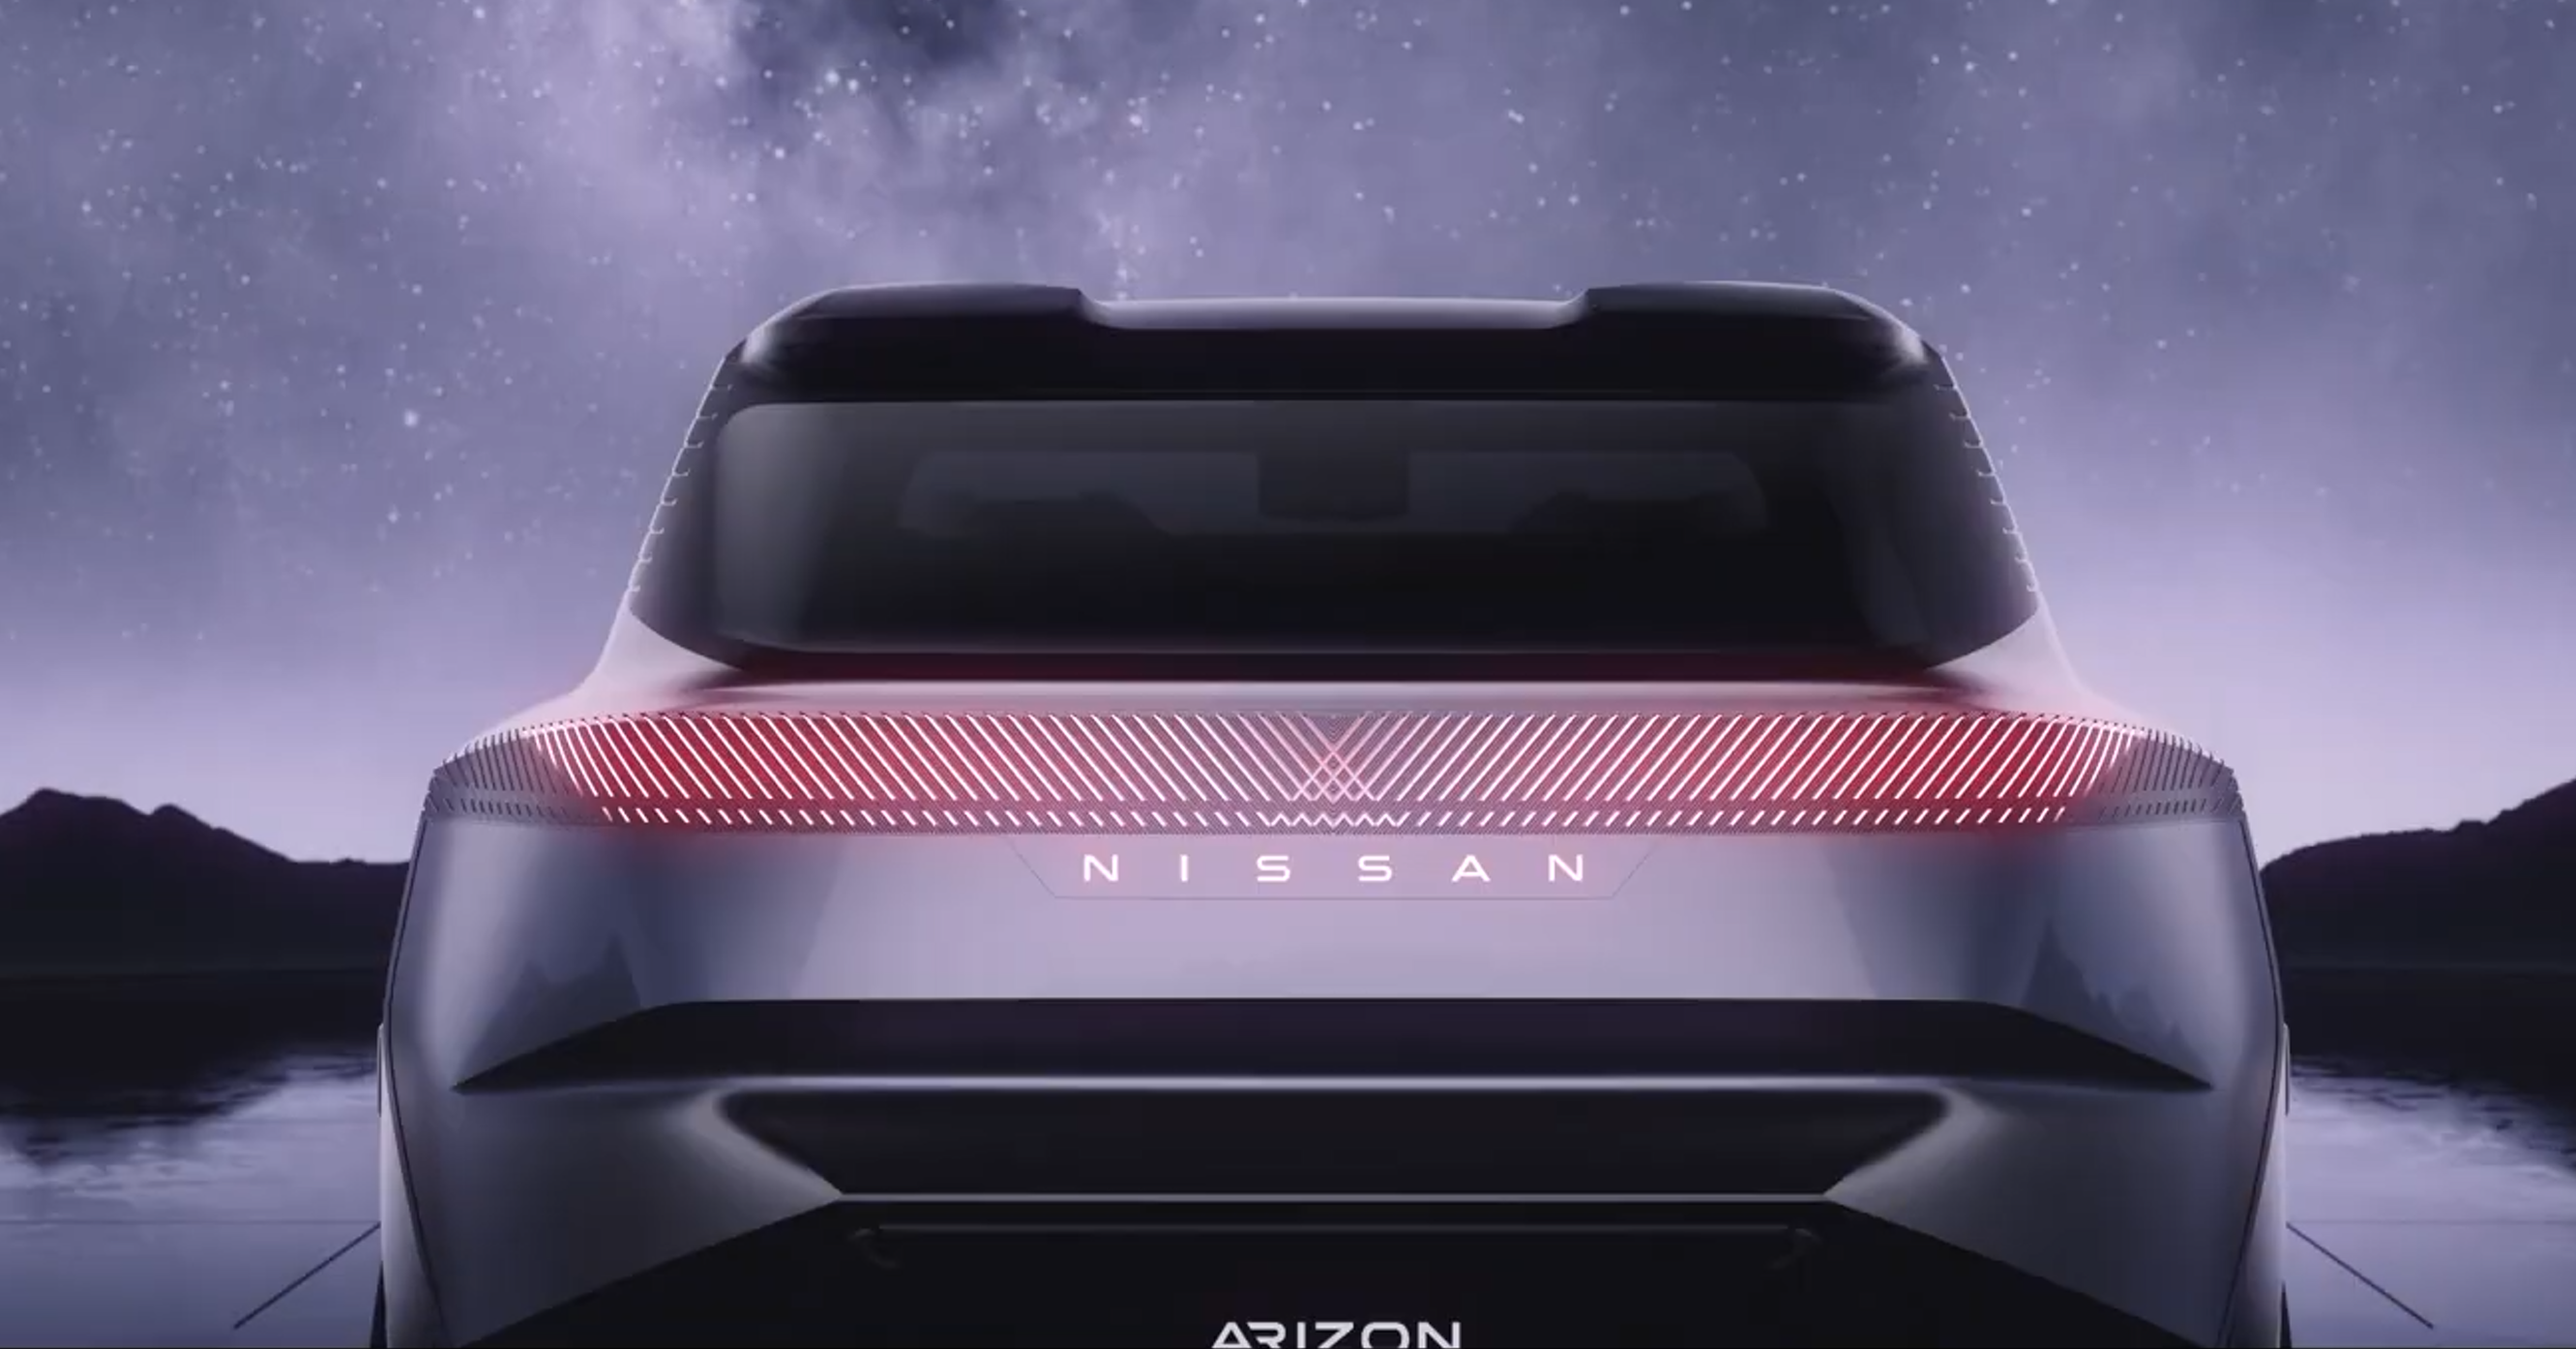 Introducing_the_Nissan_Arizon_concept